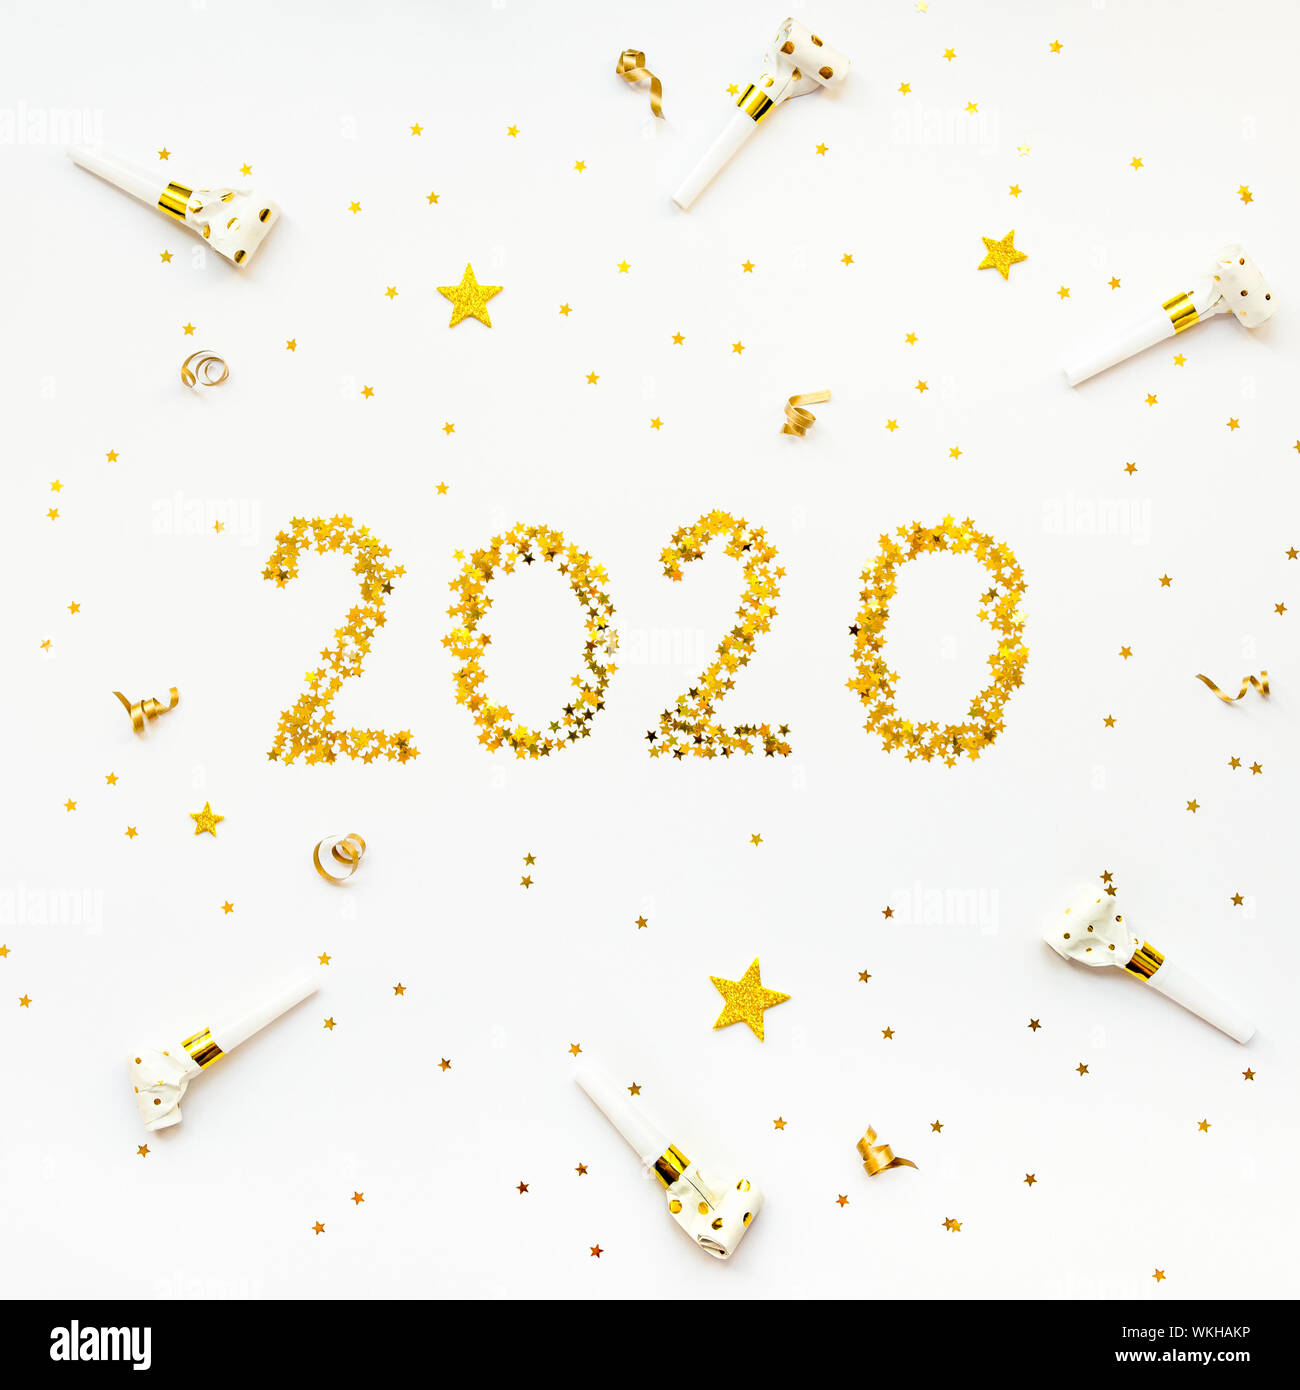 New 2020 Year golden star shaped confetti celebration background. Stock Photo